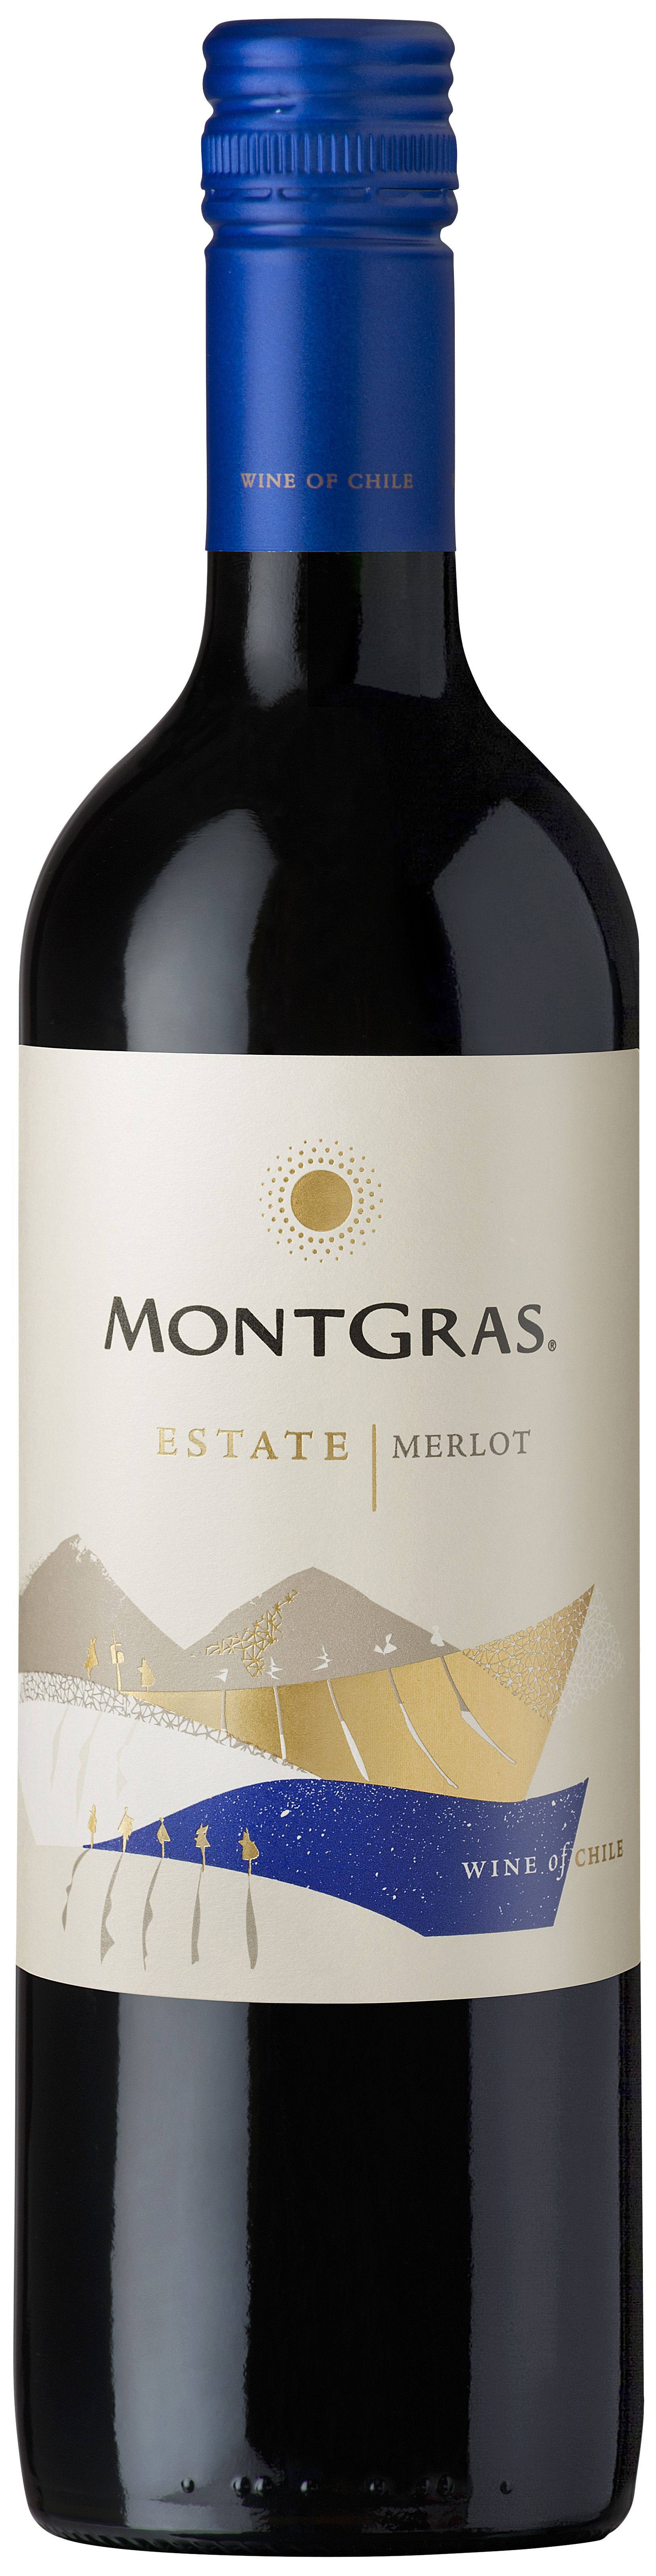 Montgras, Merlot, 2016